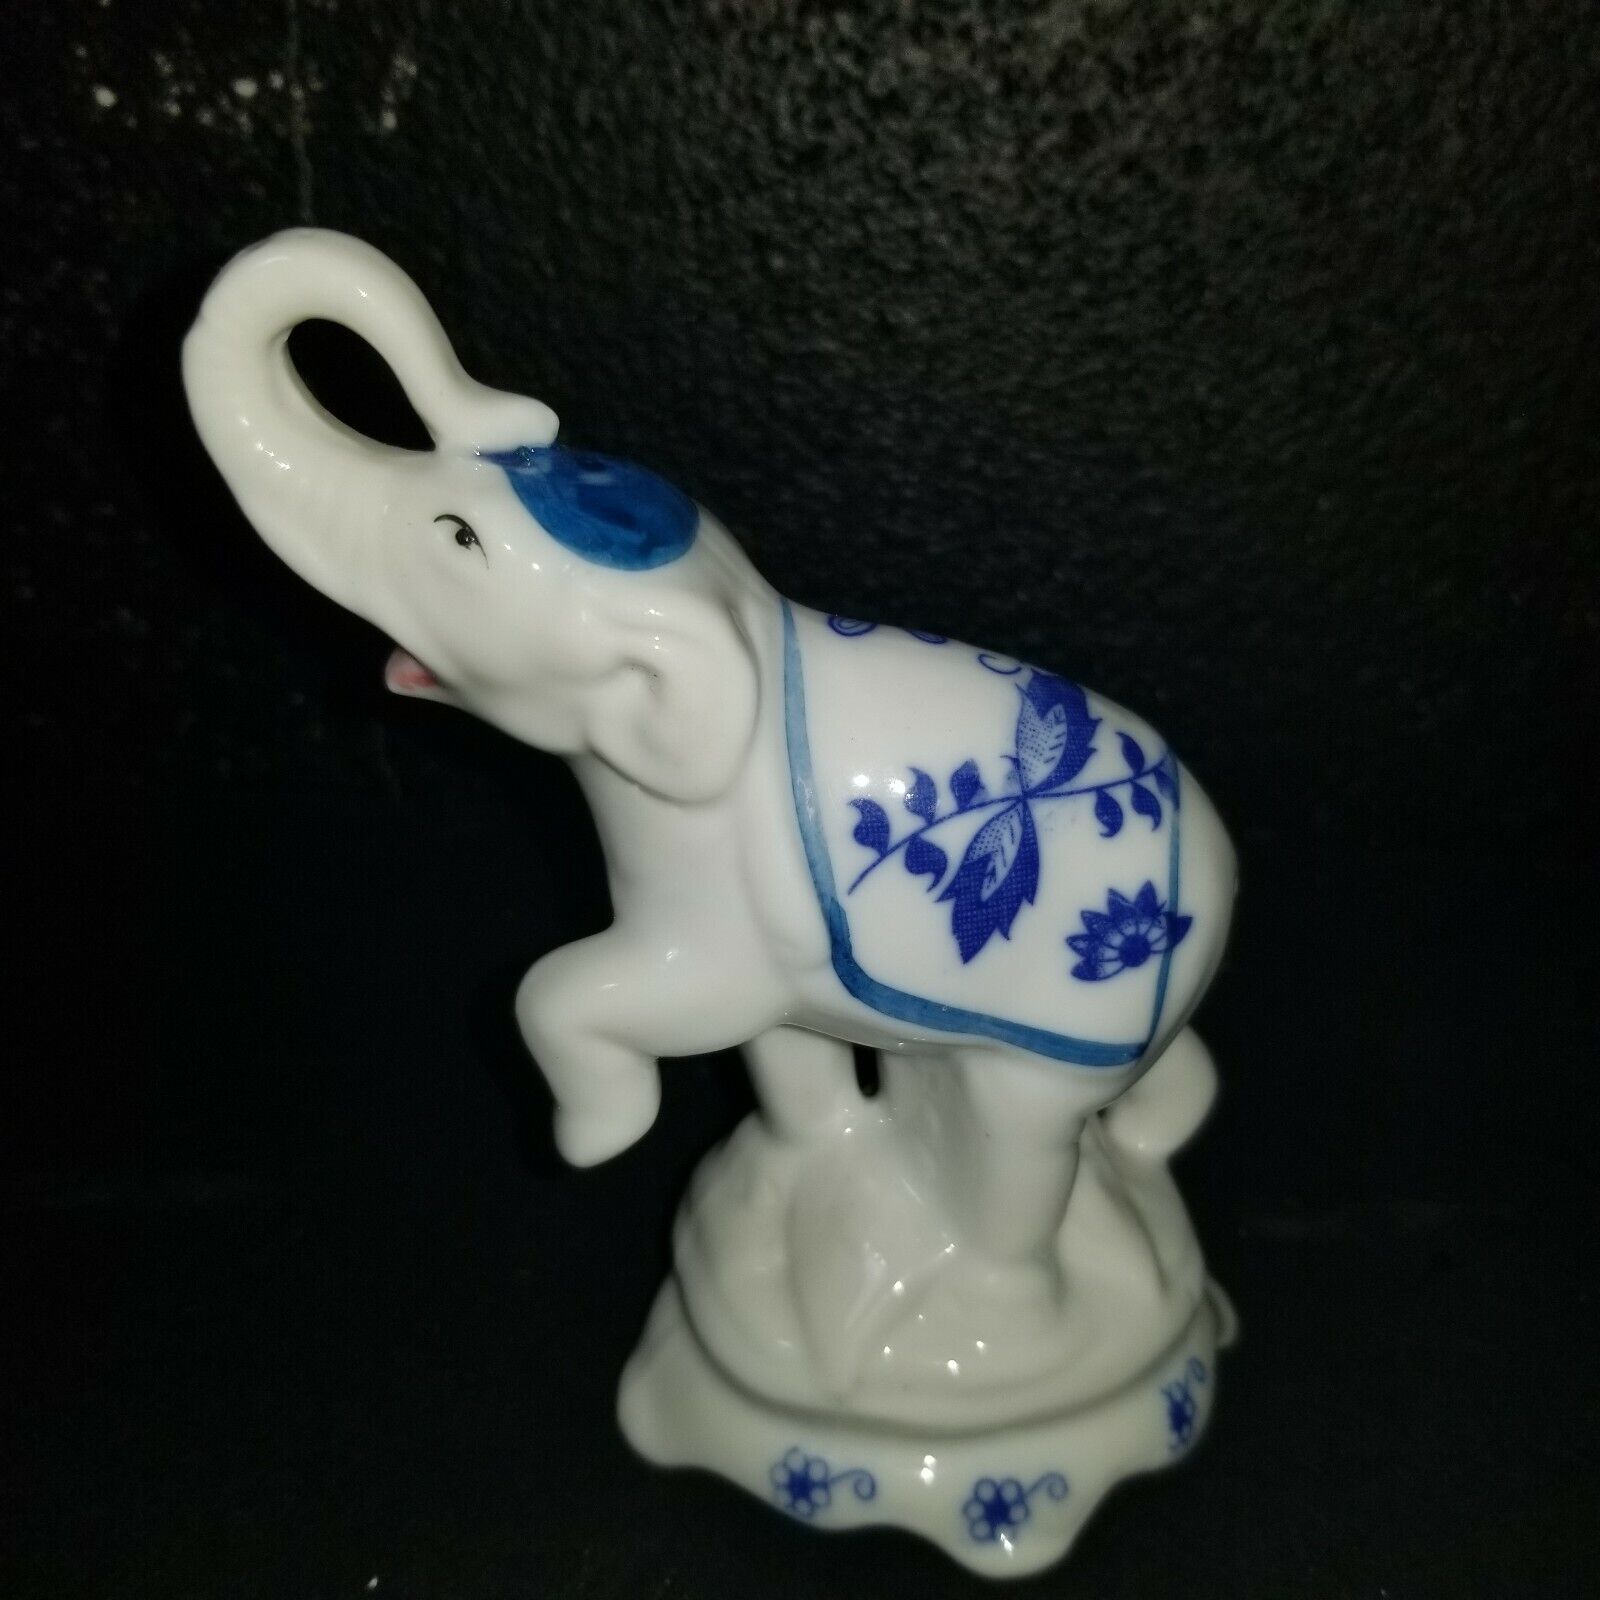 Blue Elephant Figurine Ceramic Hand Paint Craft Lucky Truck Up Home Decor Gift